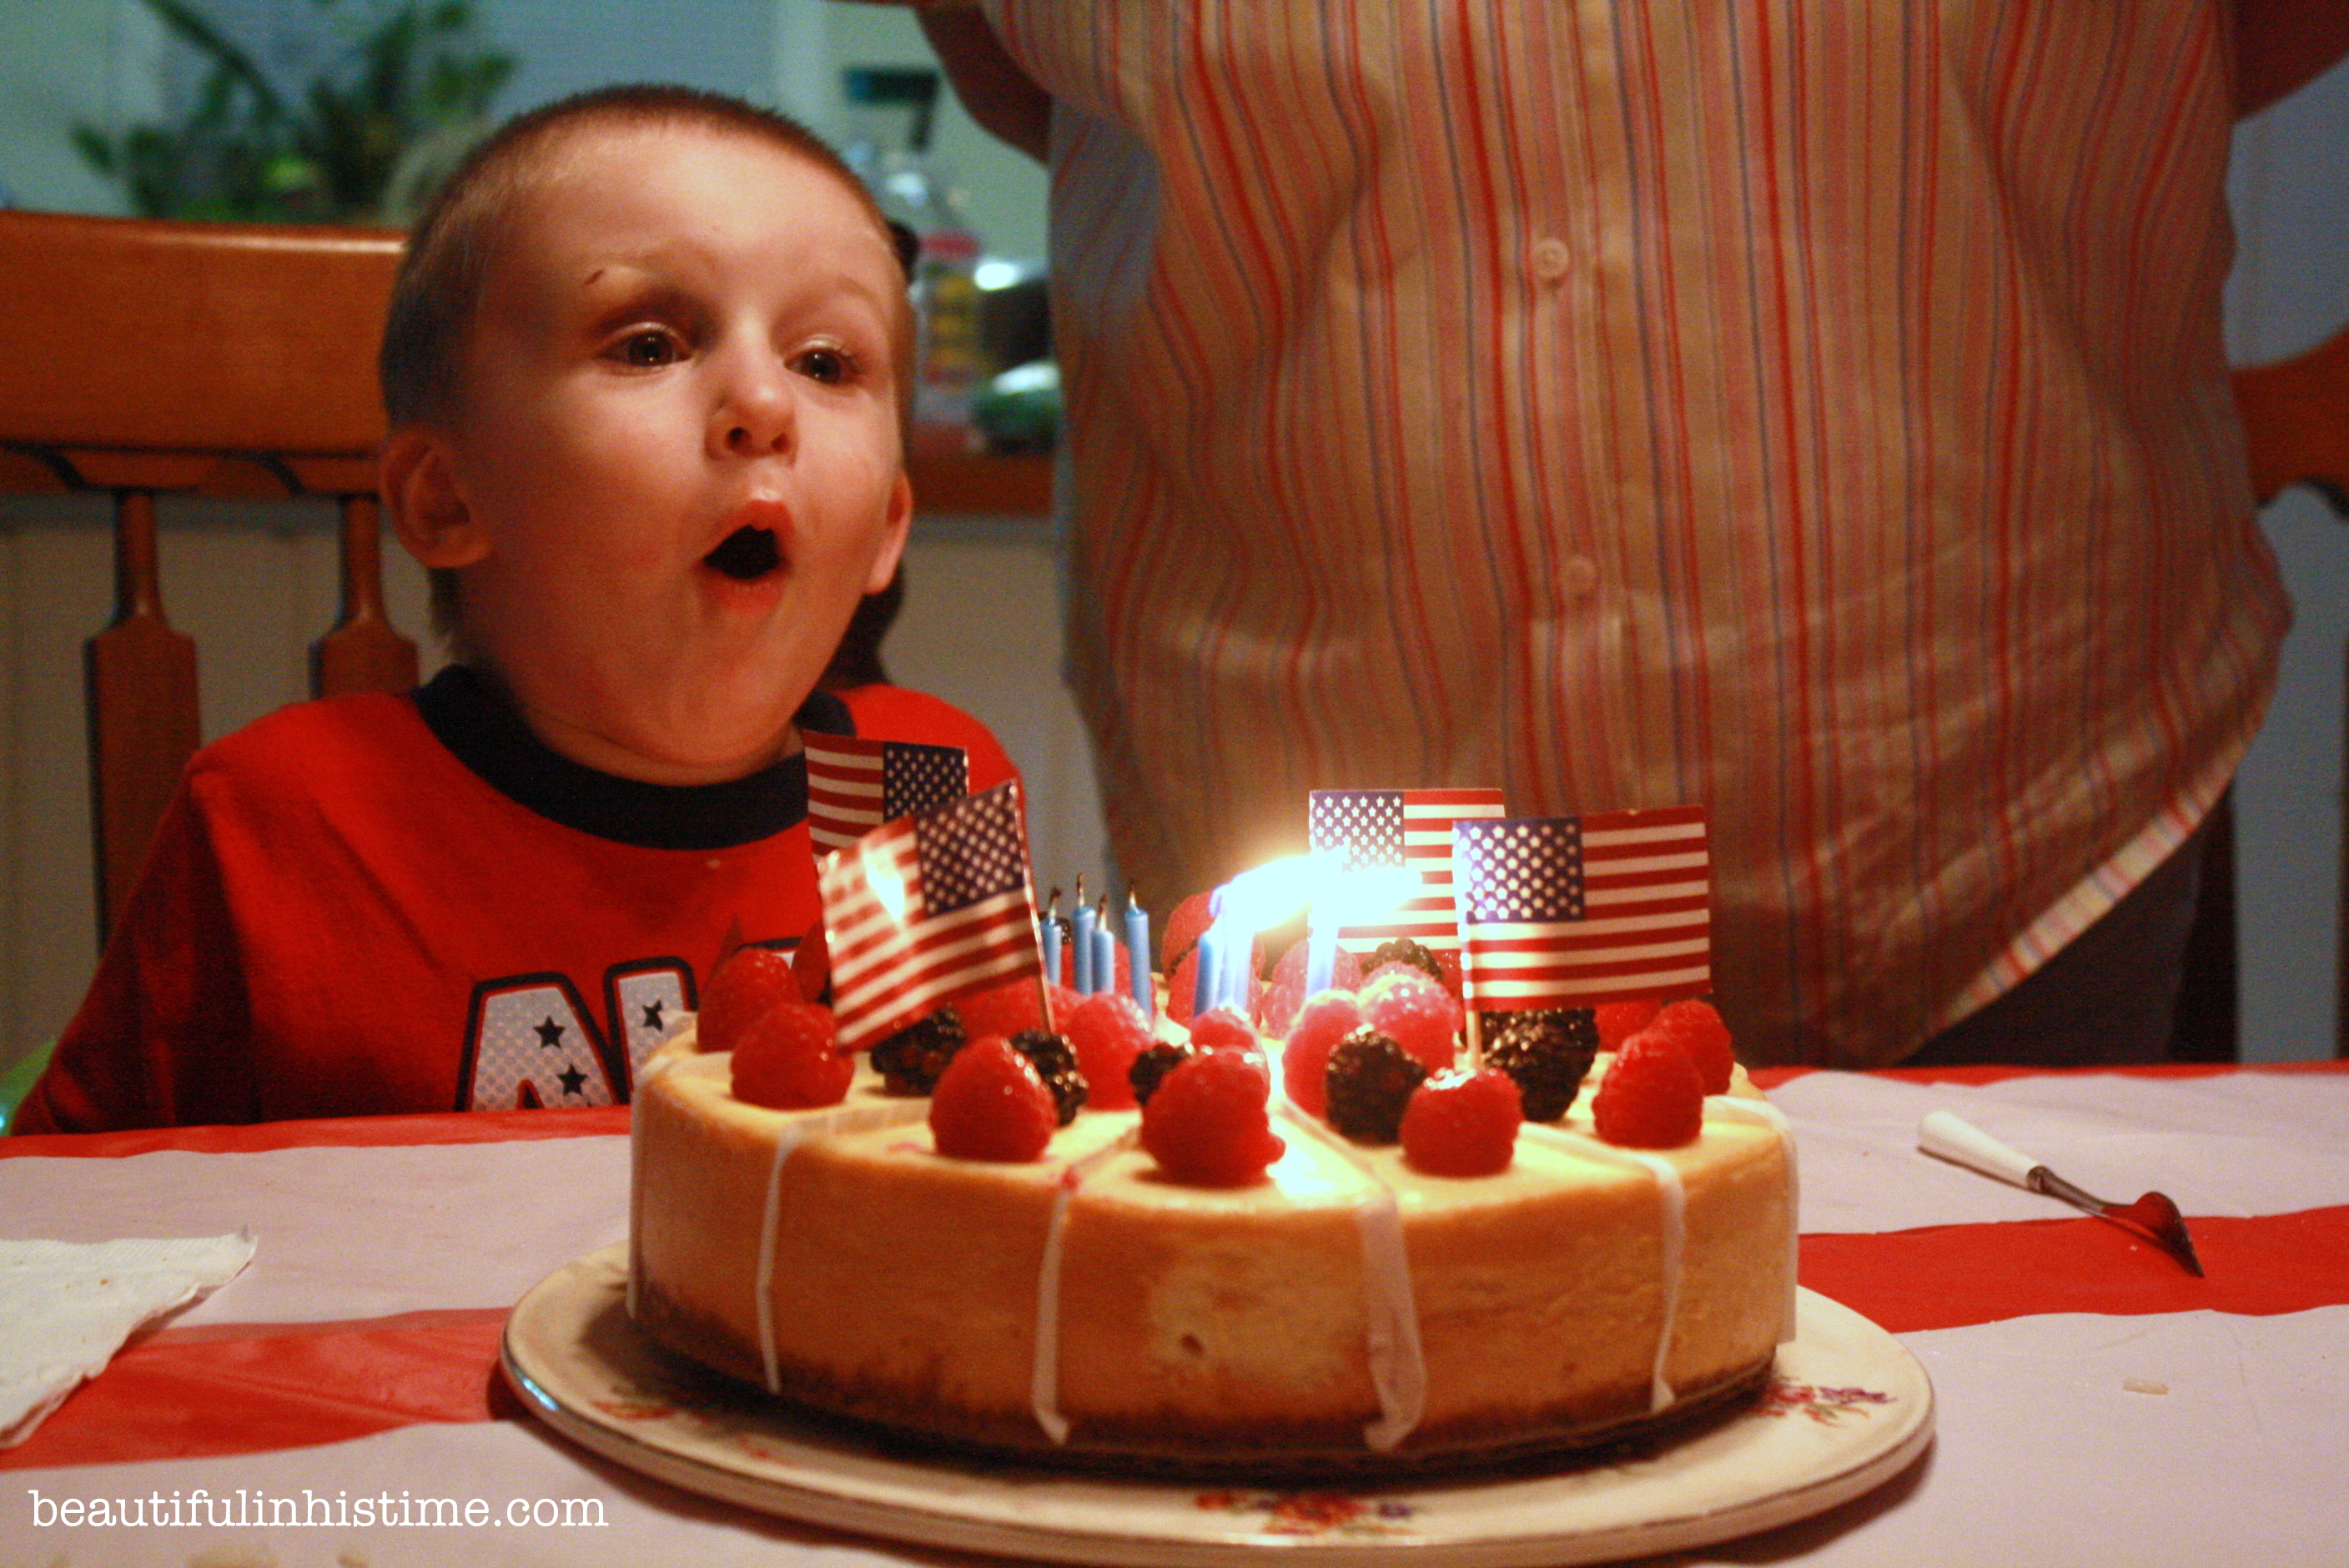 A Birthday Party for America! #birthday #america #4thofjuly #independenceday #party #birthdayparty